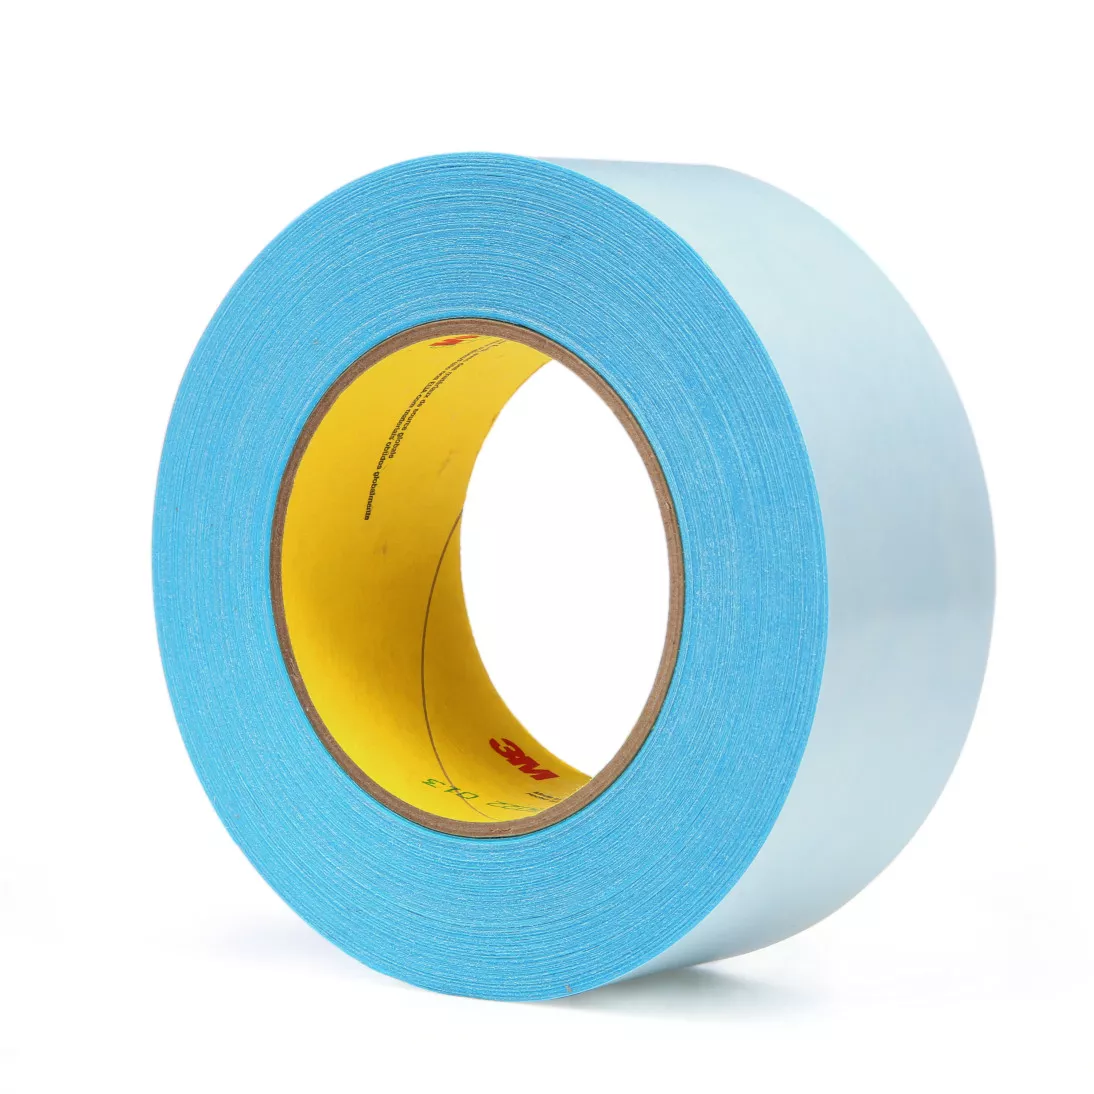 3M™ Repulpable Double Coated Splicing Tape 9038B, Blue, 48 mm x 55 m, 3
mil, 24 rolls per case